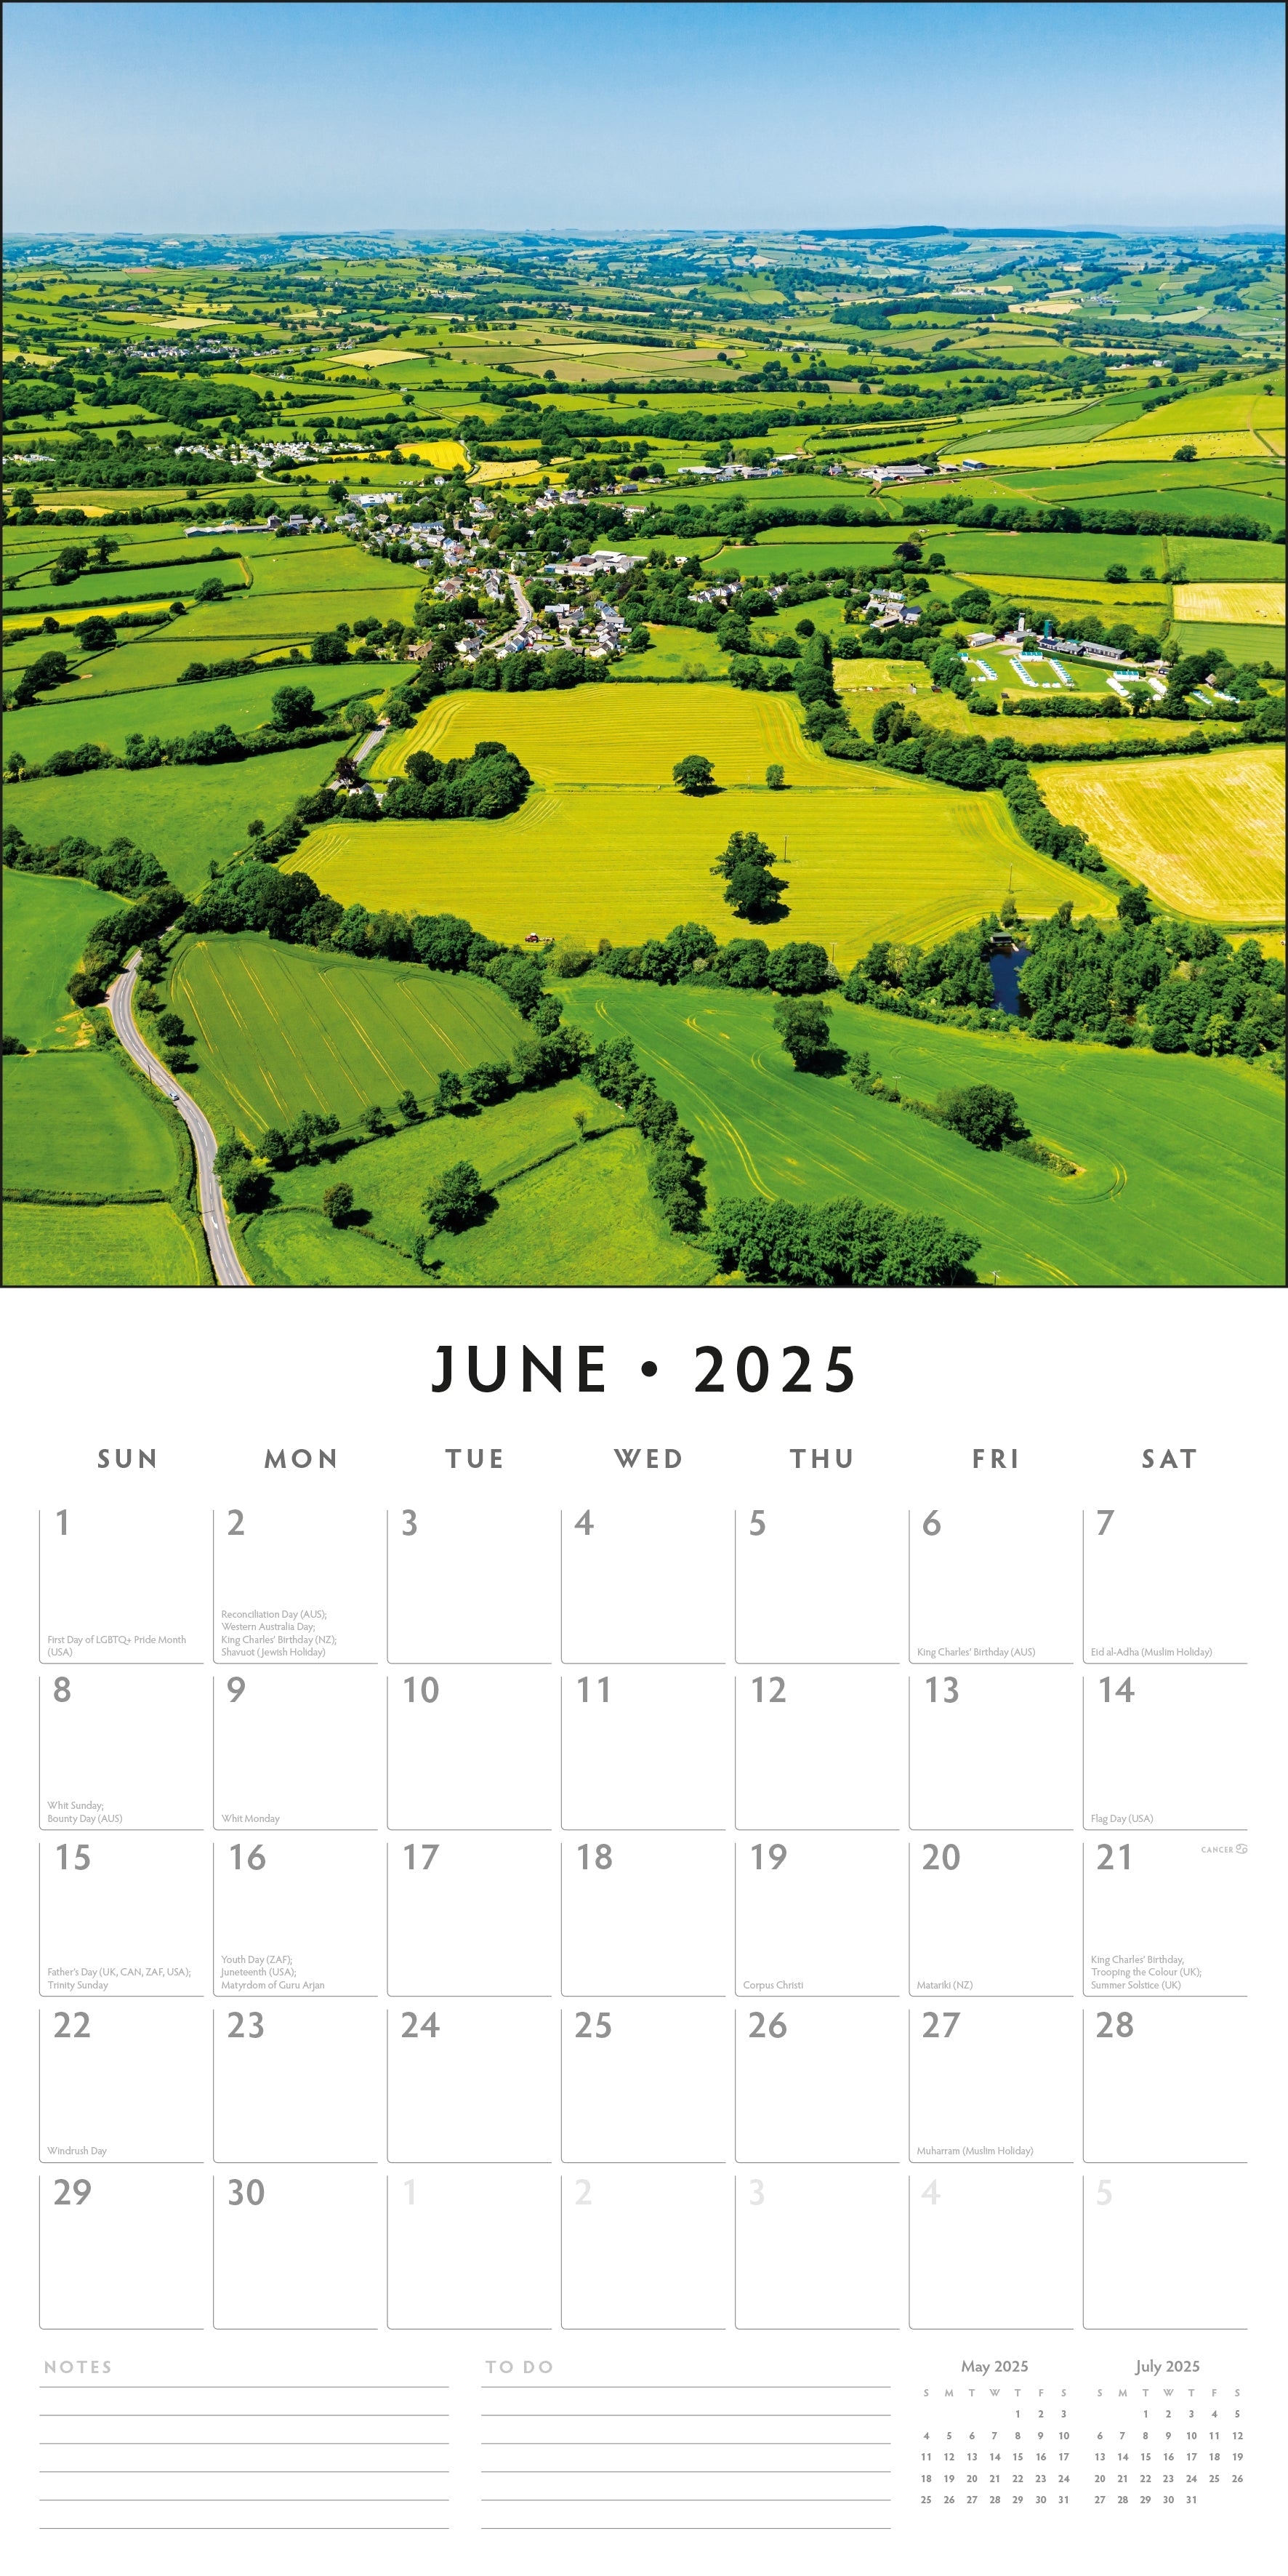 2025 Country Scenes - Square Wall Calendar